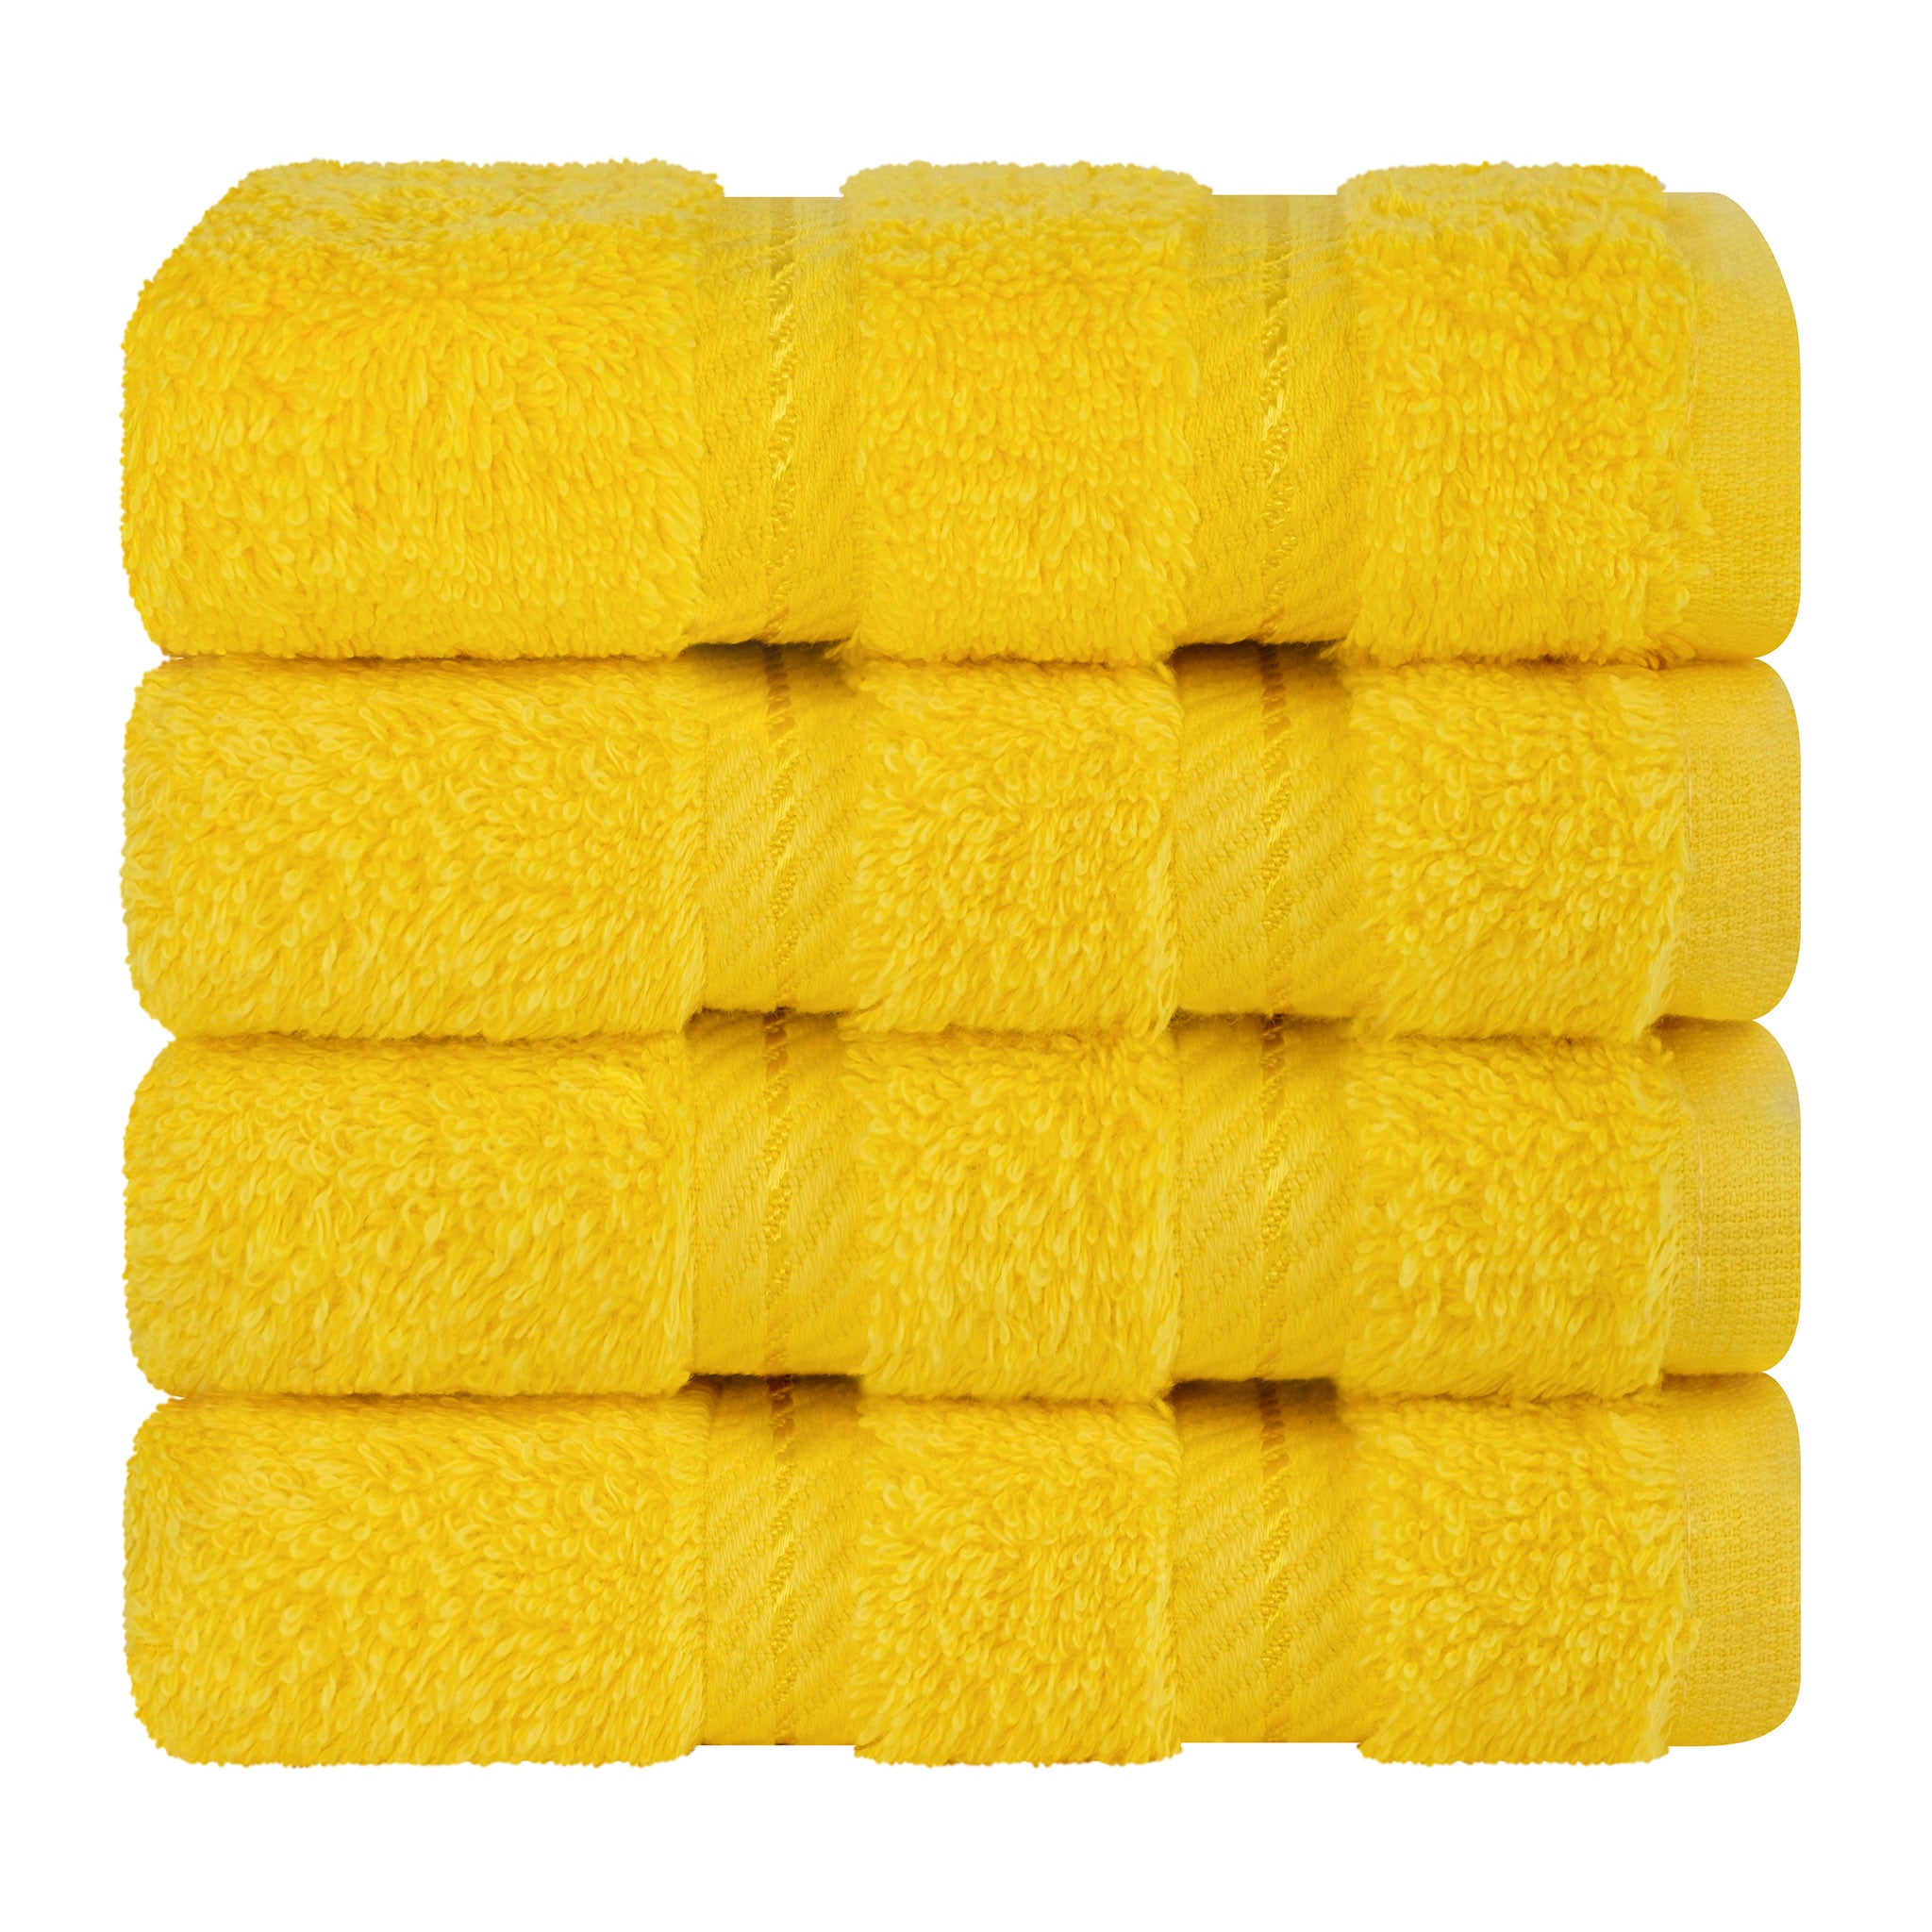 American Soft Linen 100% Turkish Cotton 4 Piece Washcloth Set malibu-yellow-7